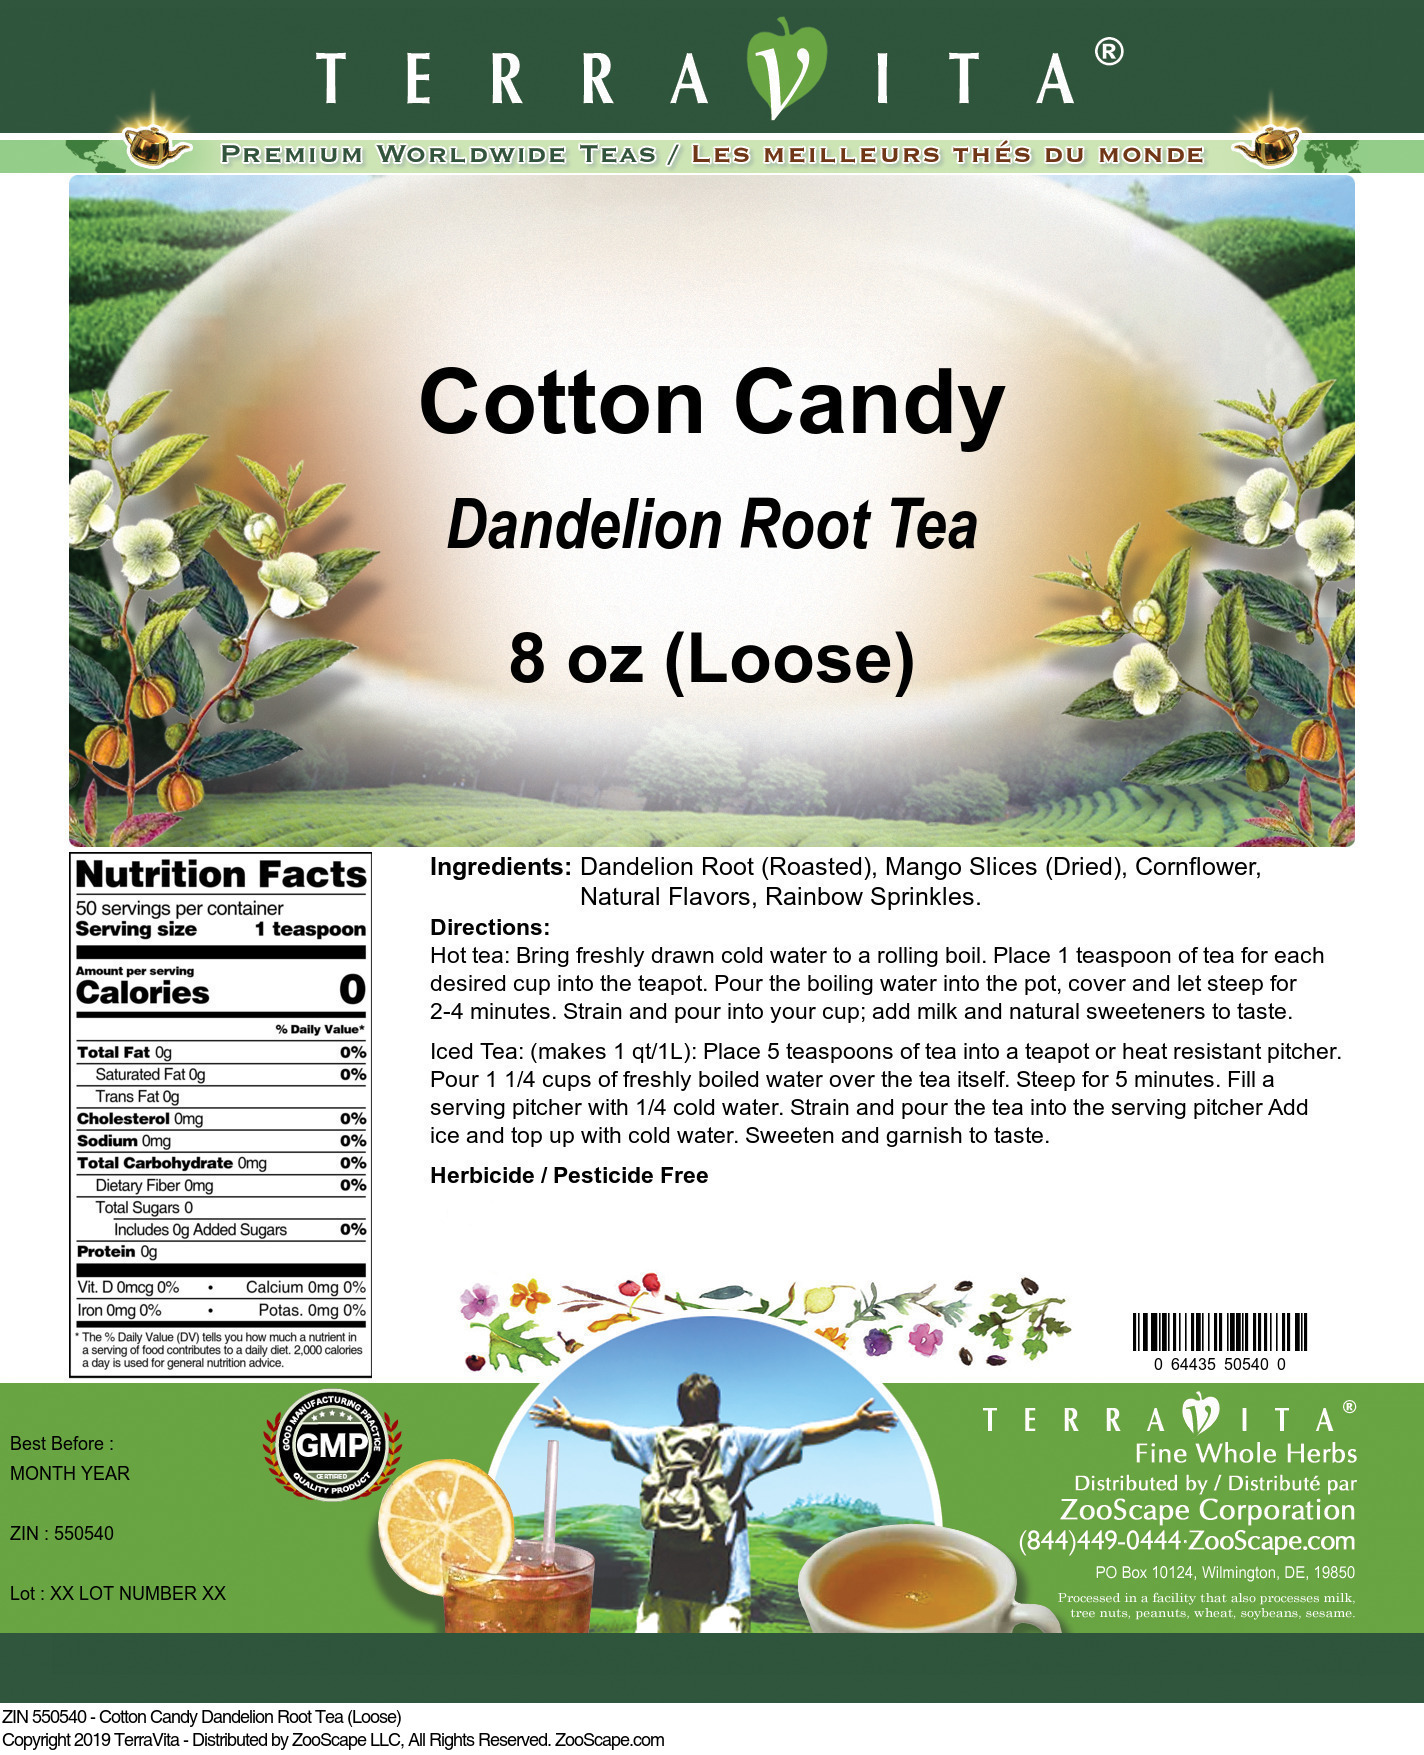 Cotton Candy Dandelion Root Tea (Loose) - Label